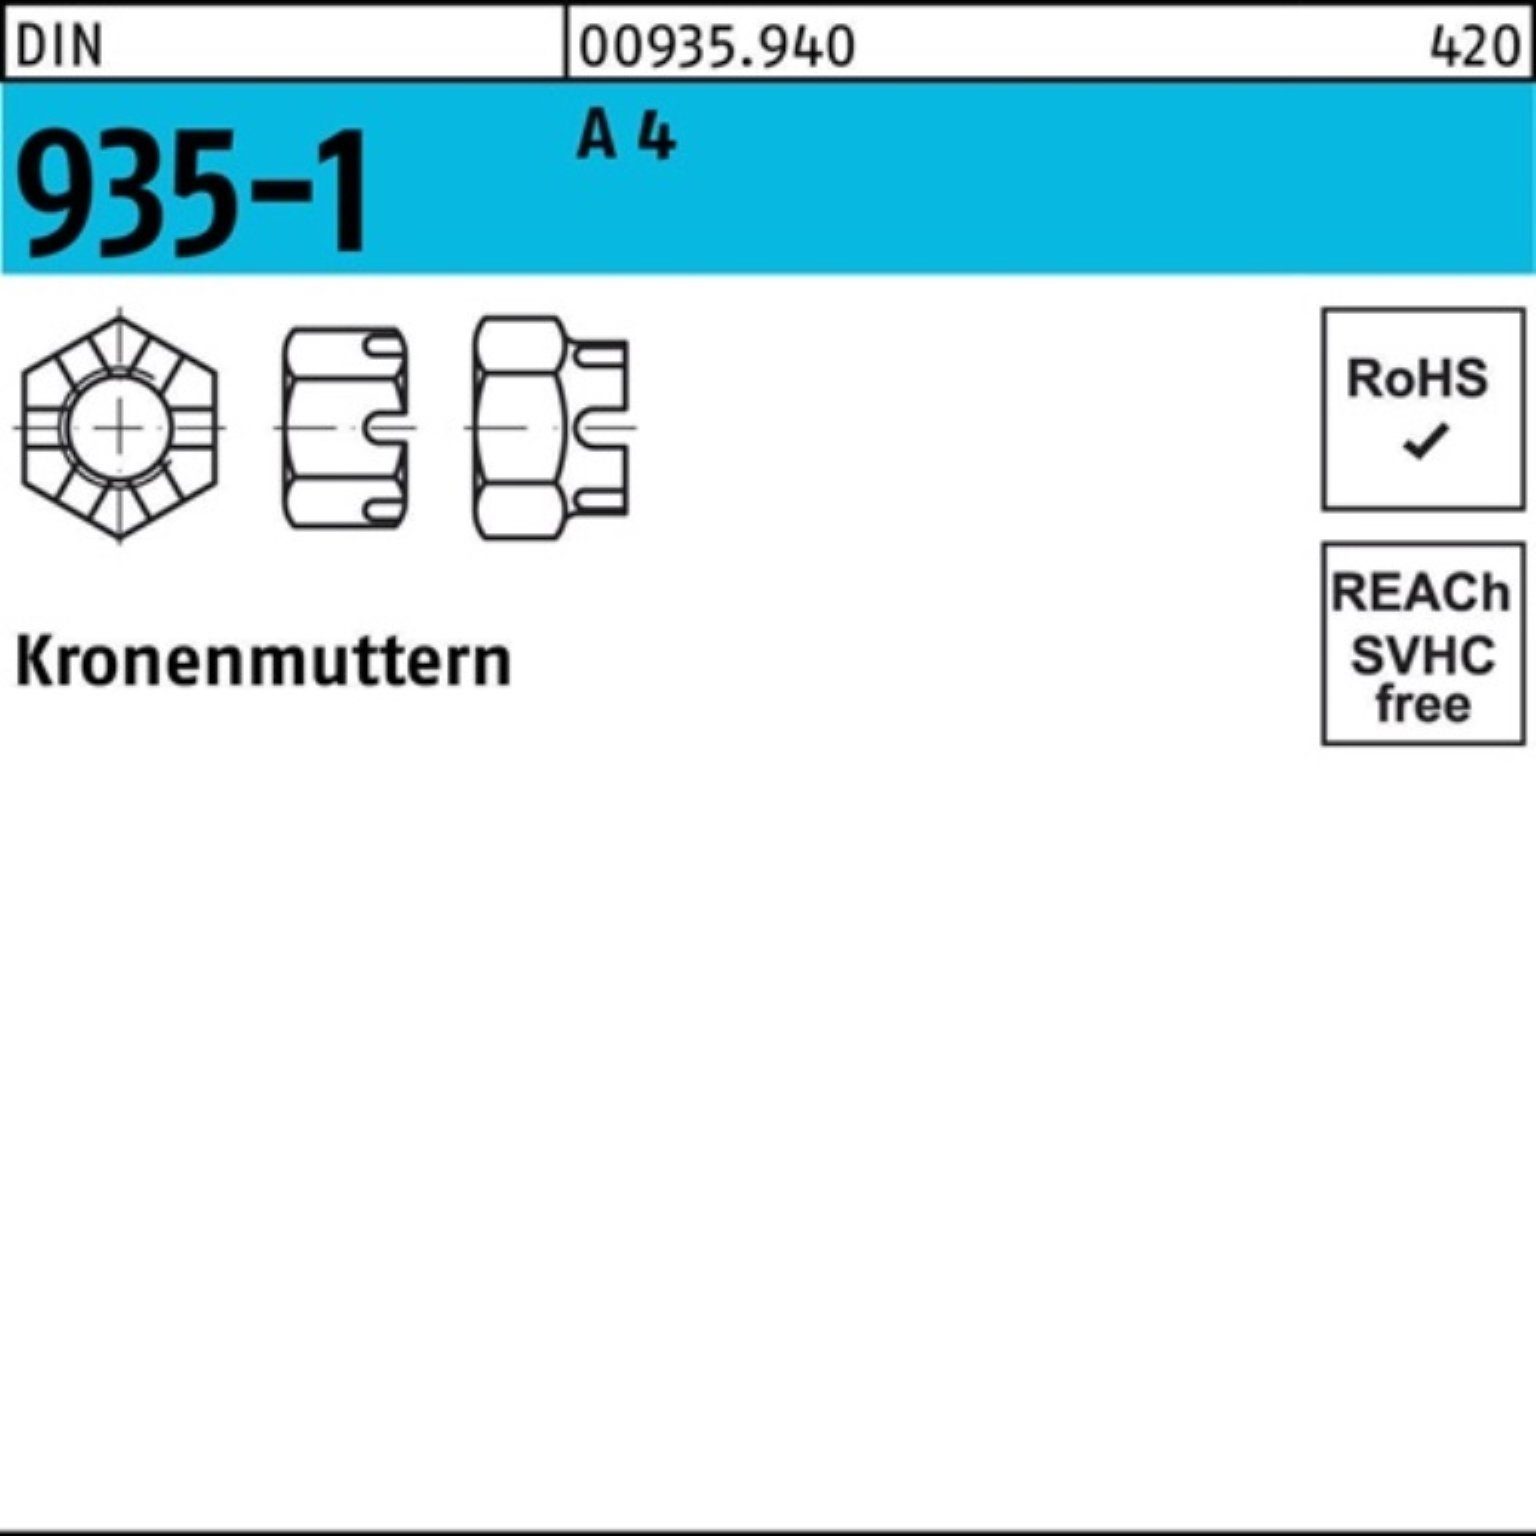 Reyher Kronenmutter 100er Pack Kronenmutter DIN 935-1 M20 A 4 1 Stück DIN 935-1 A 4 Krone